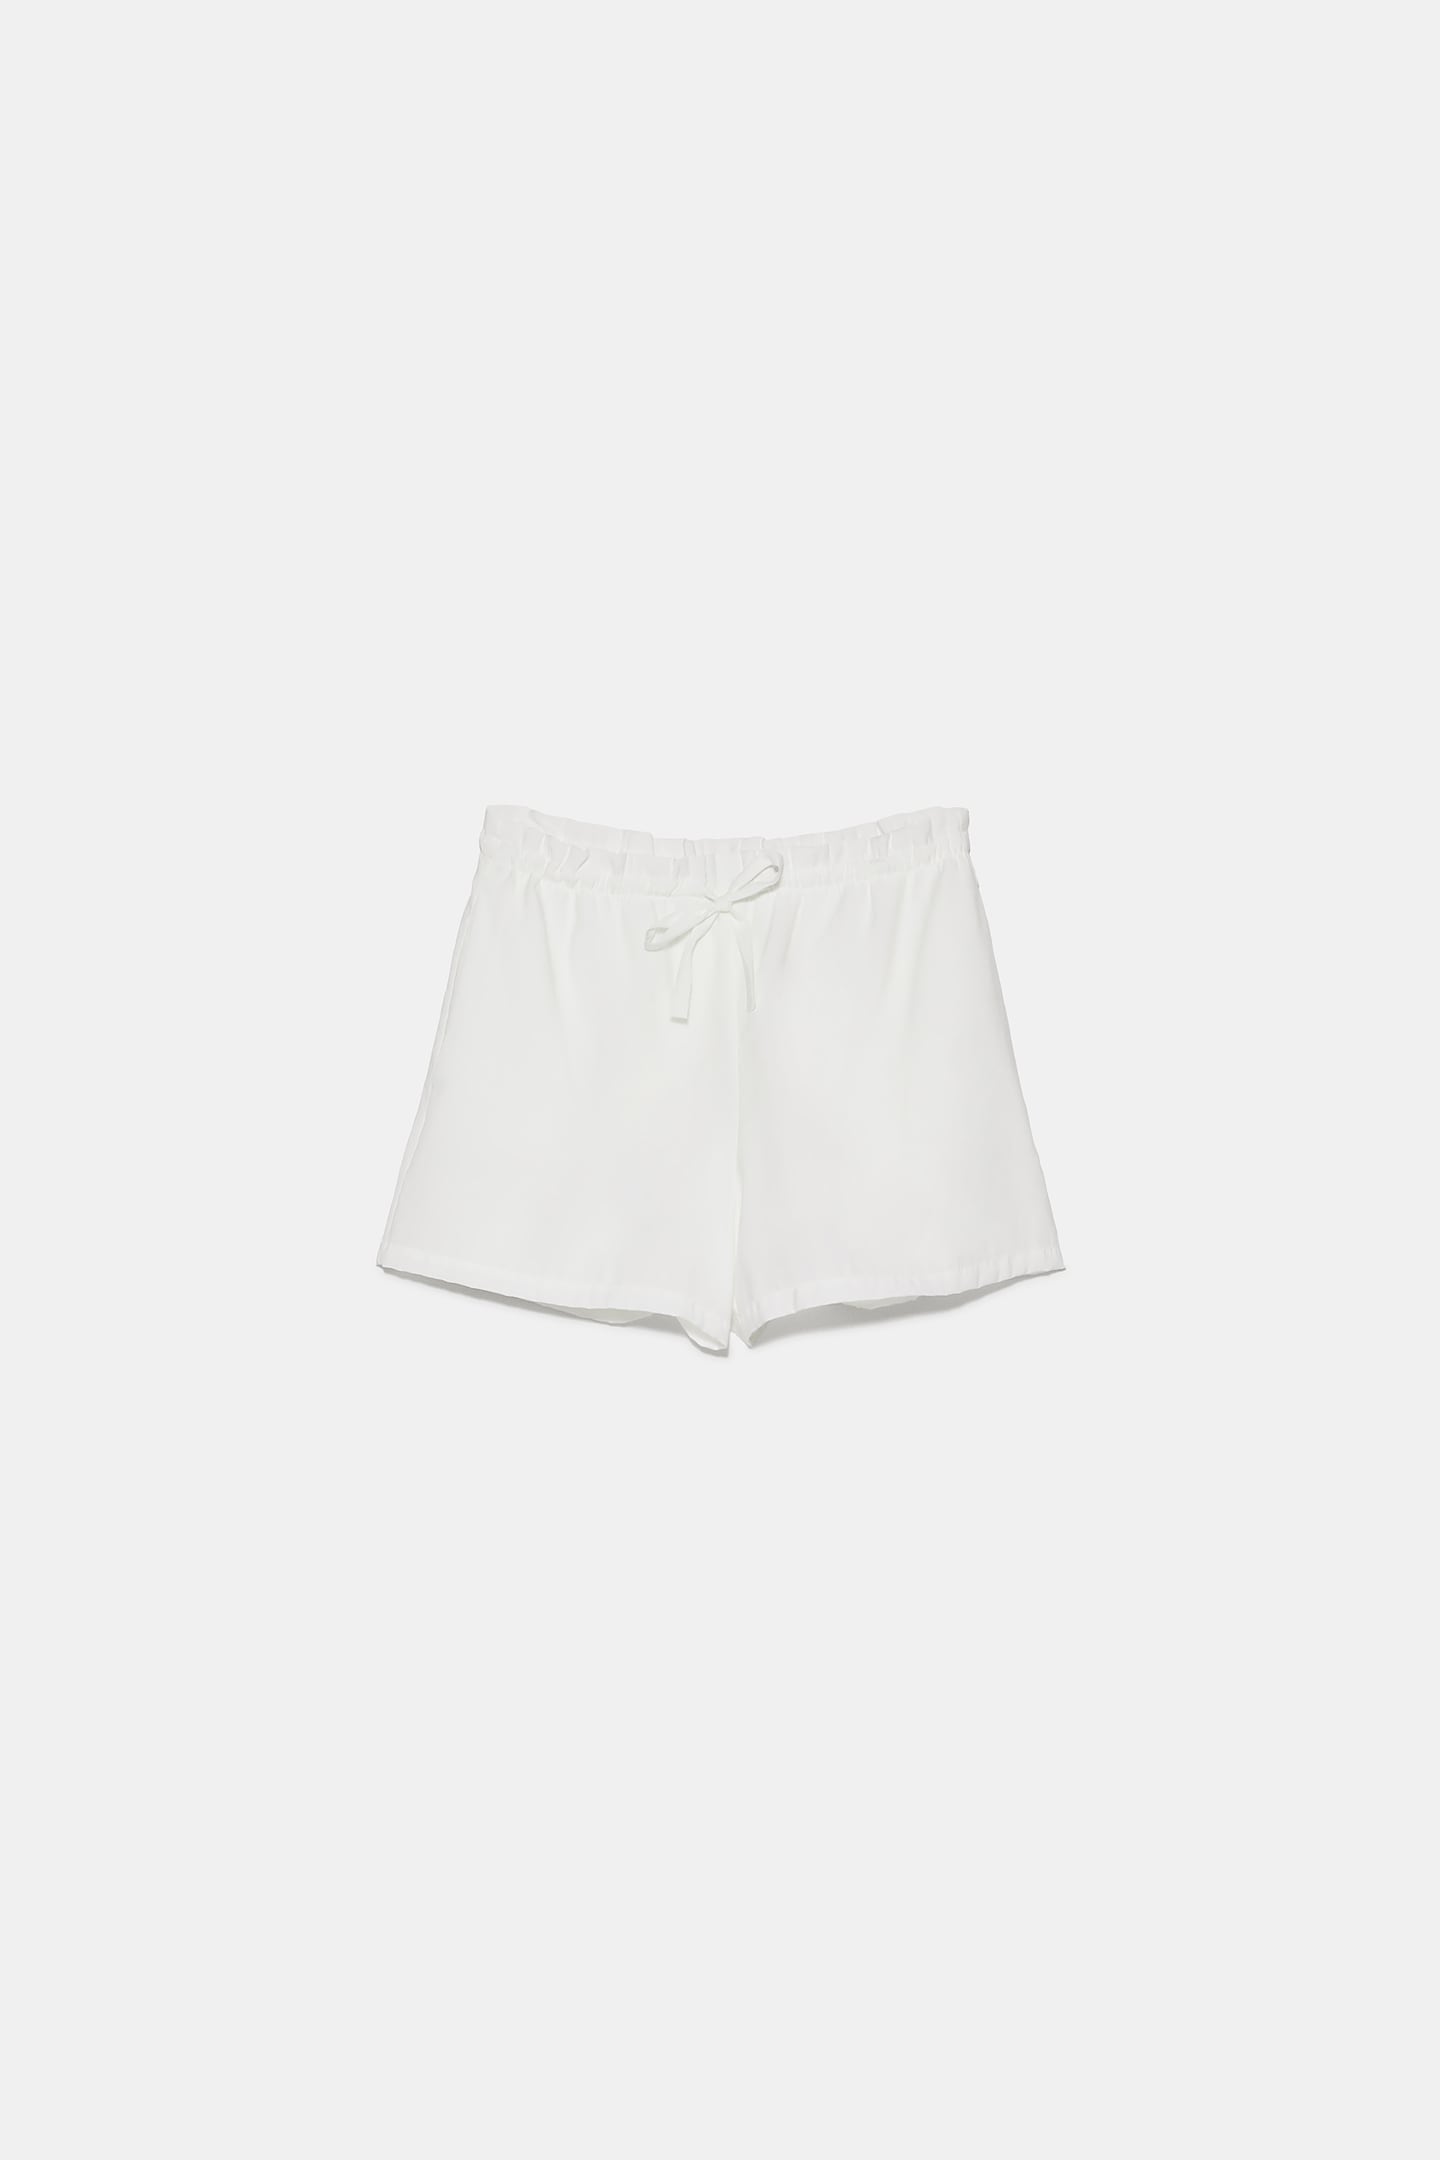 Zara + Flowing Shorts with Drawstring